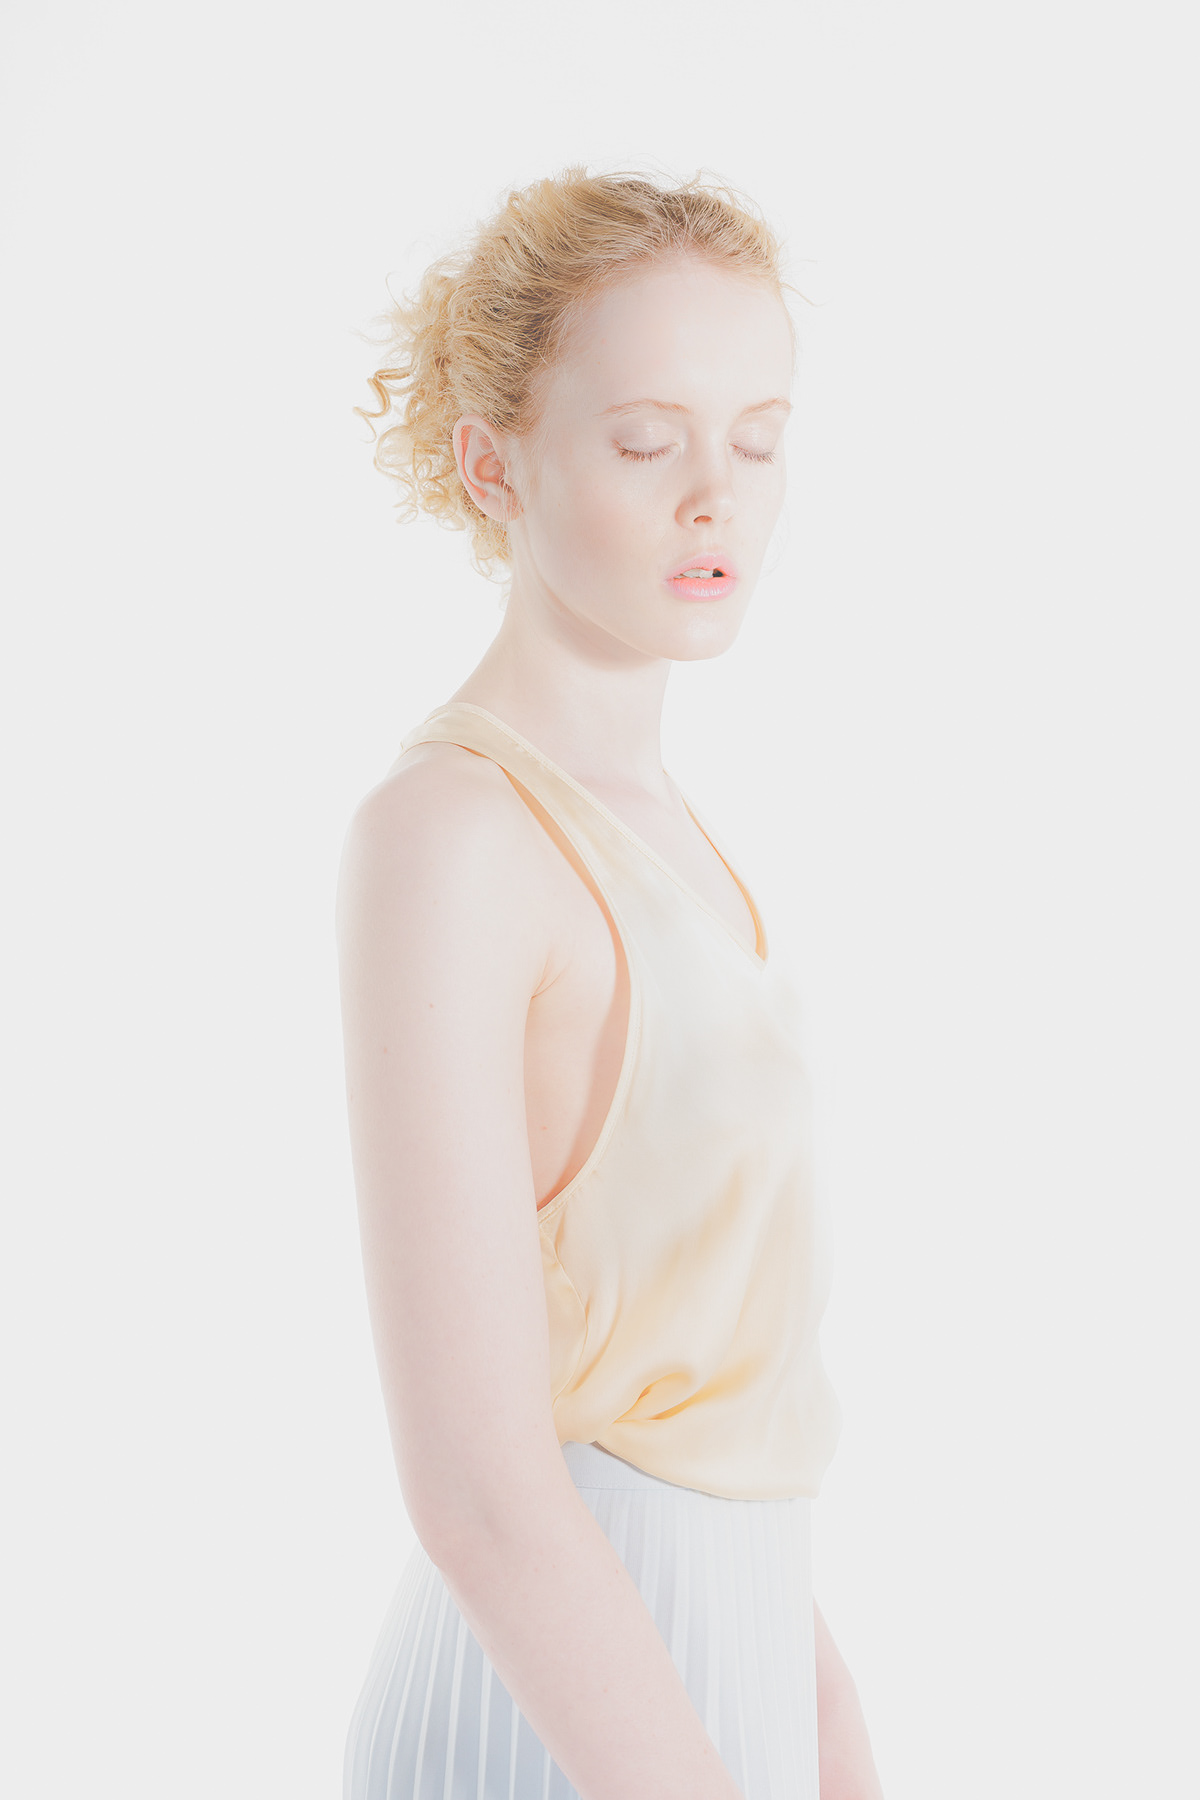 Adobe Portfolio Adobe Portfolio model beauty editorial story Kirsten Hupertz portrait verena von pufendorf